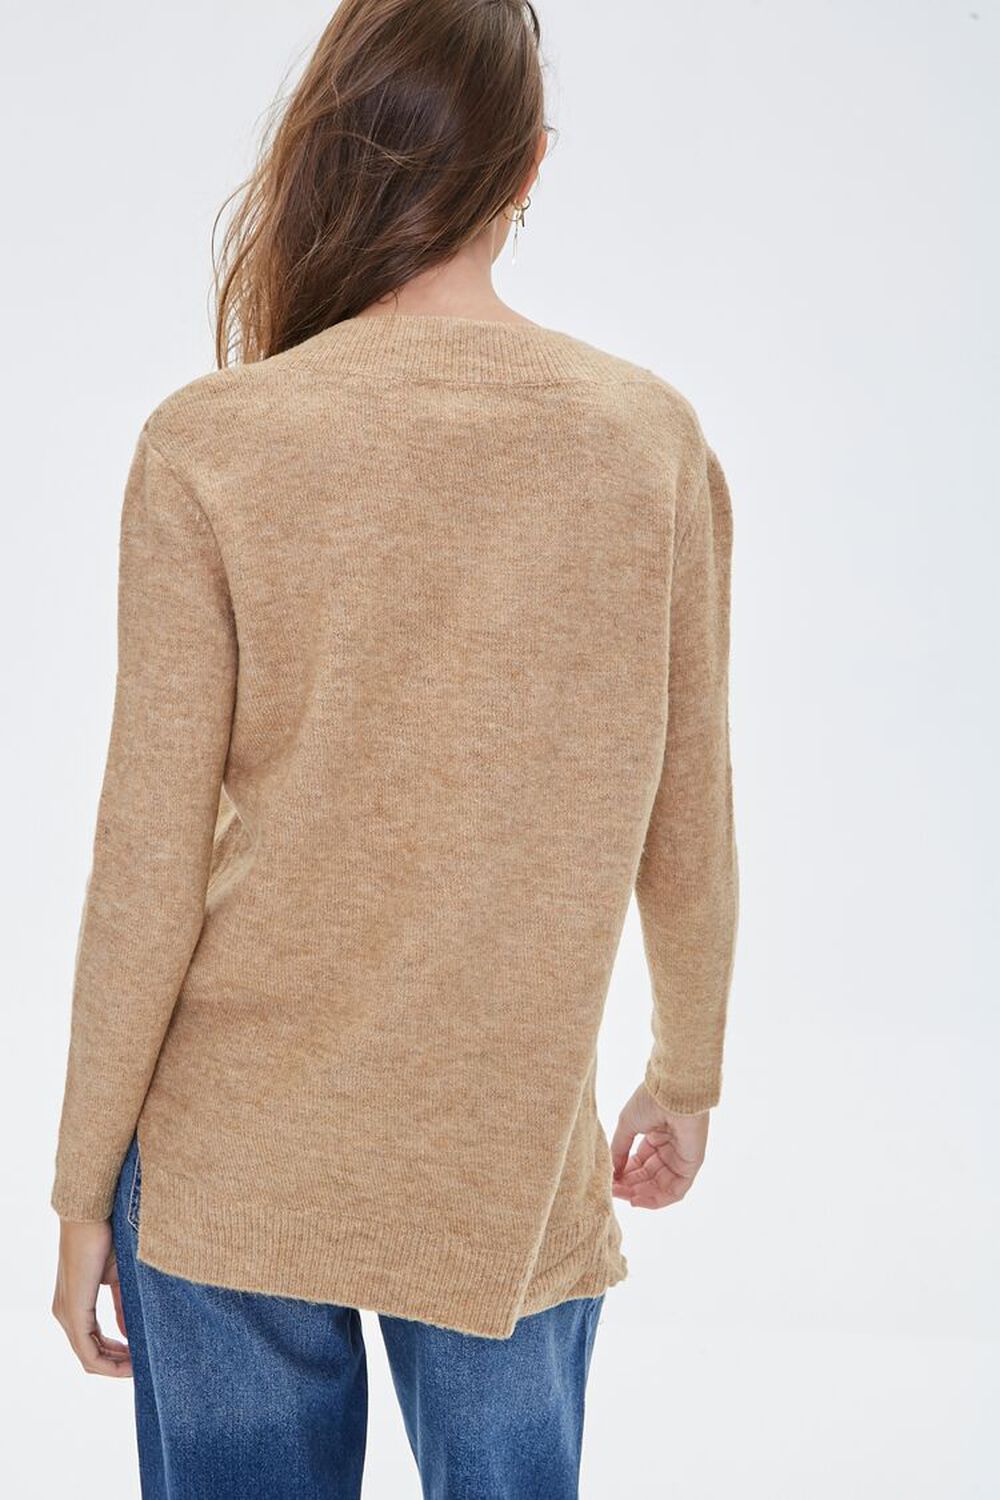 TAN Marled V-Neck Sweater, image 3